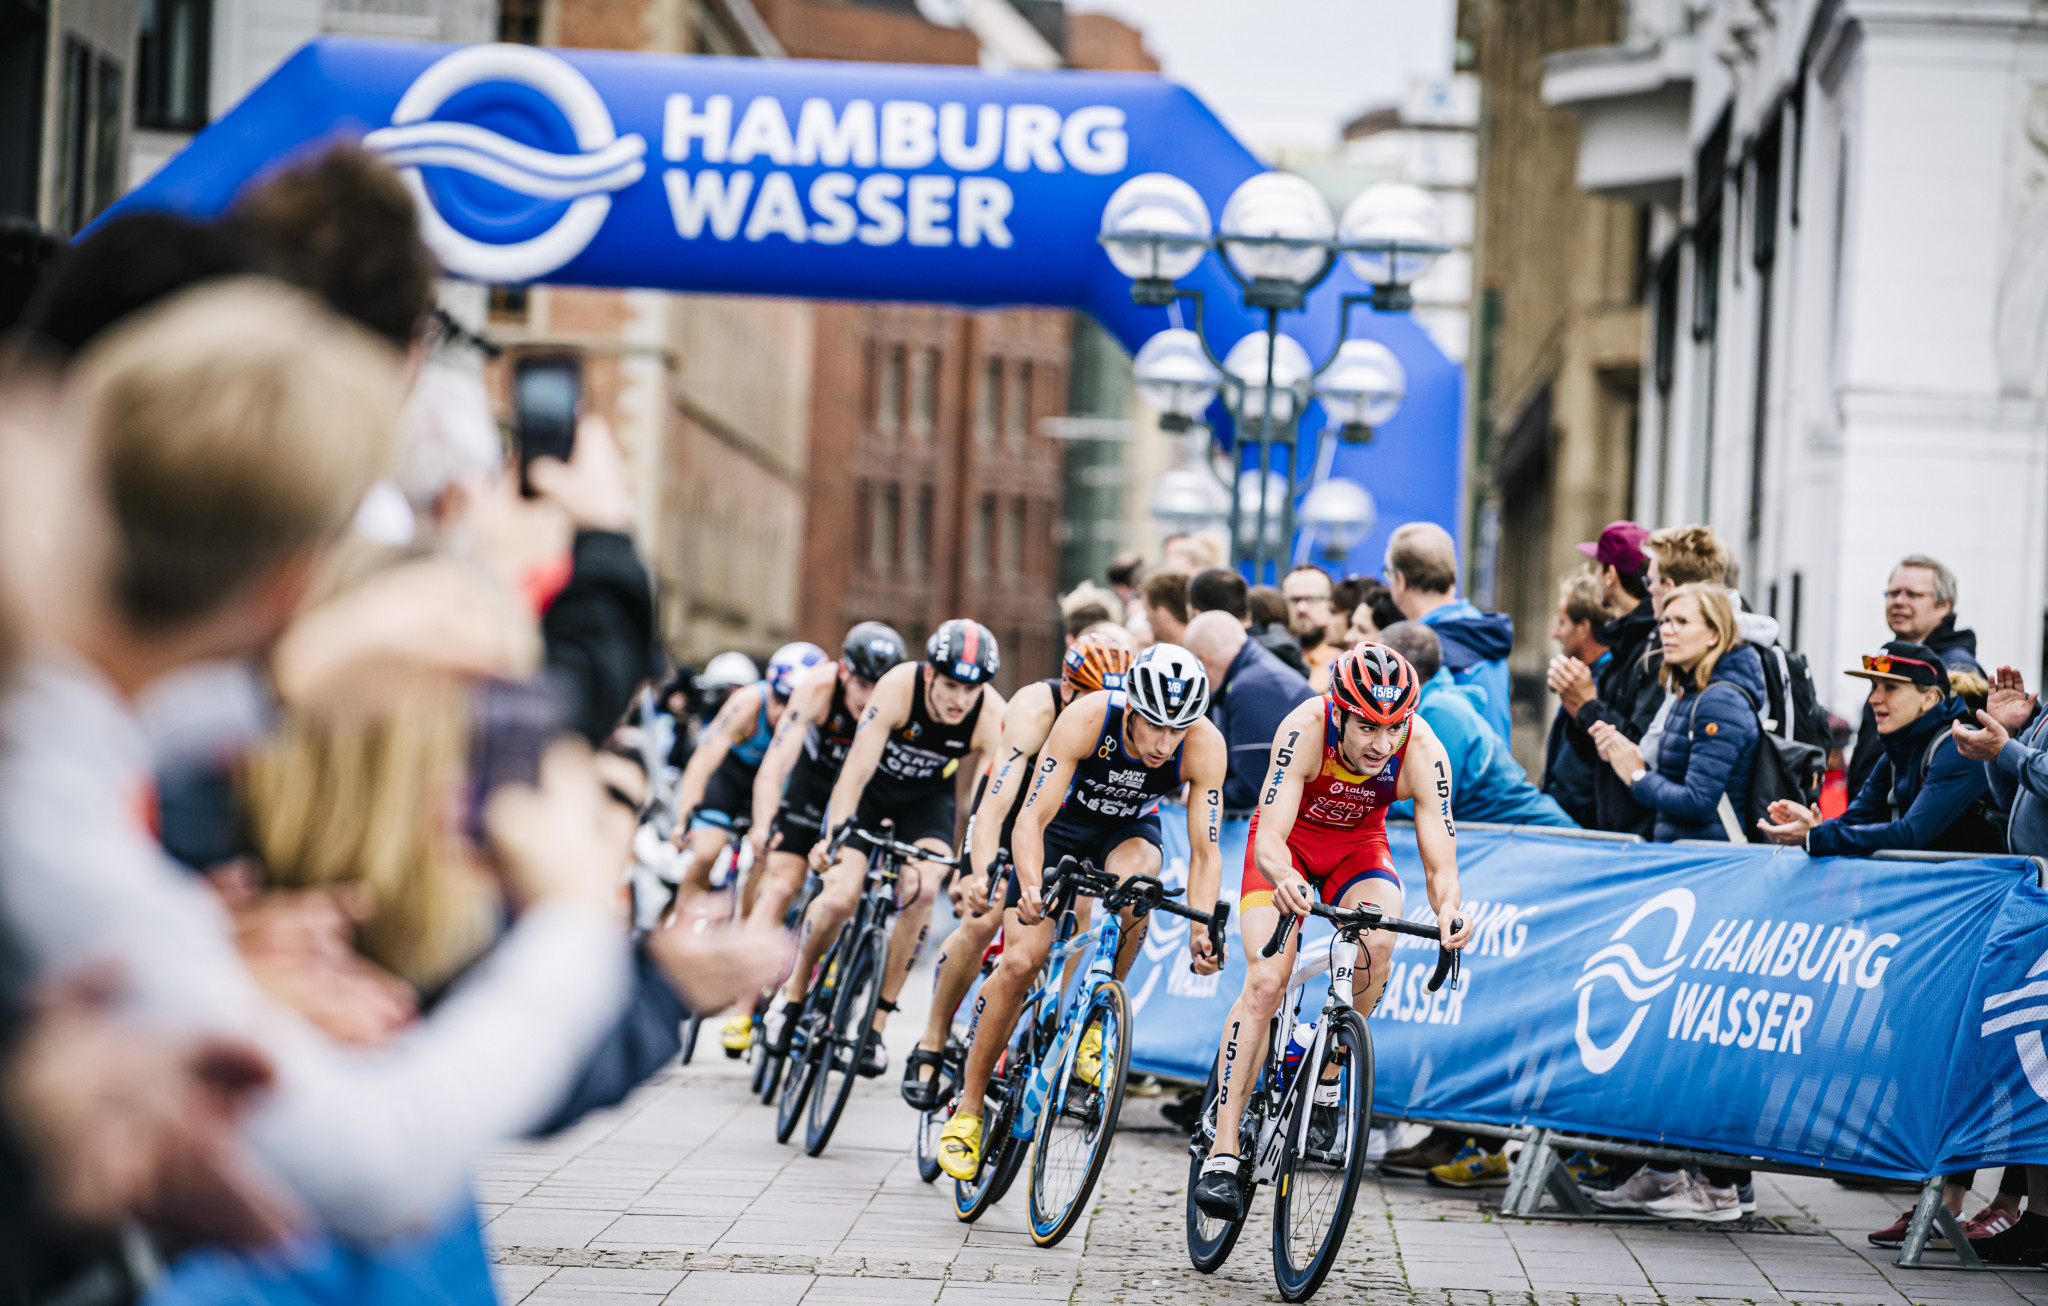 Hamburg leg of World Triathlon Championship Series postponed due to COVID-19